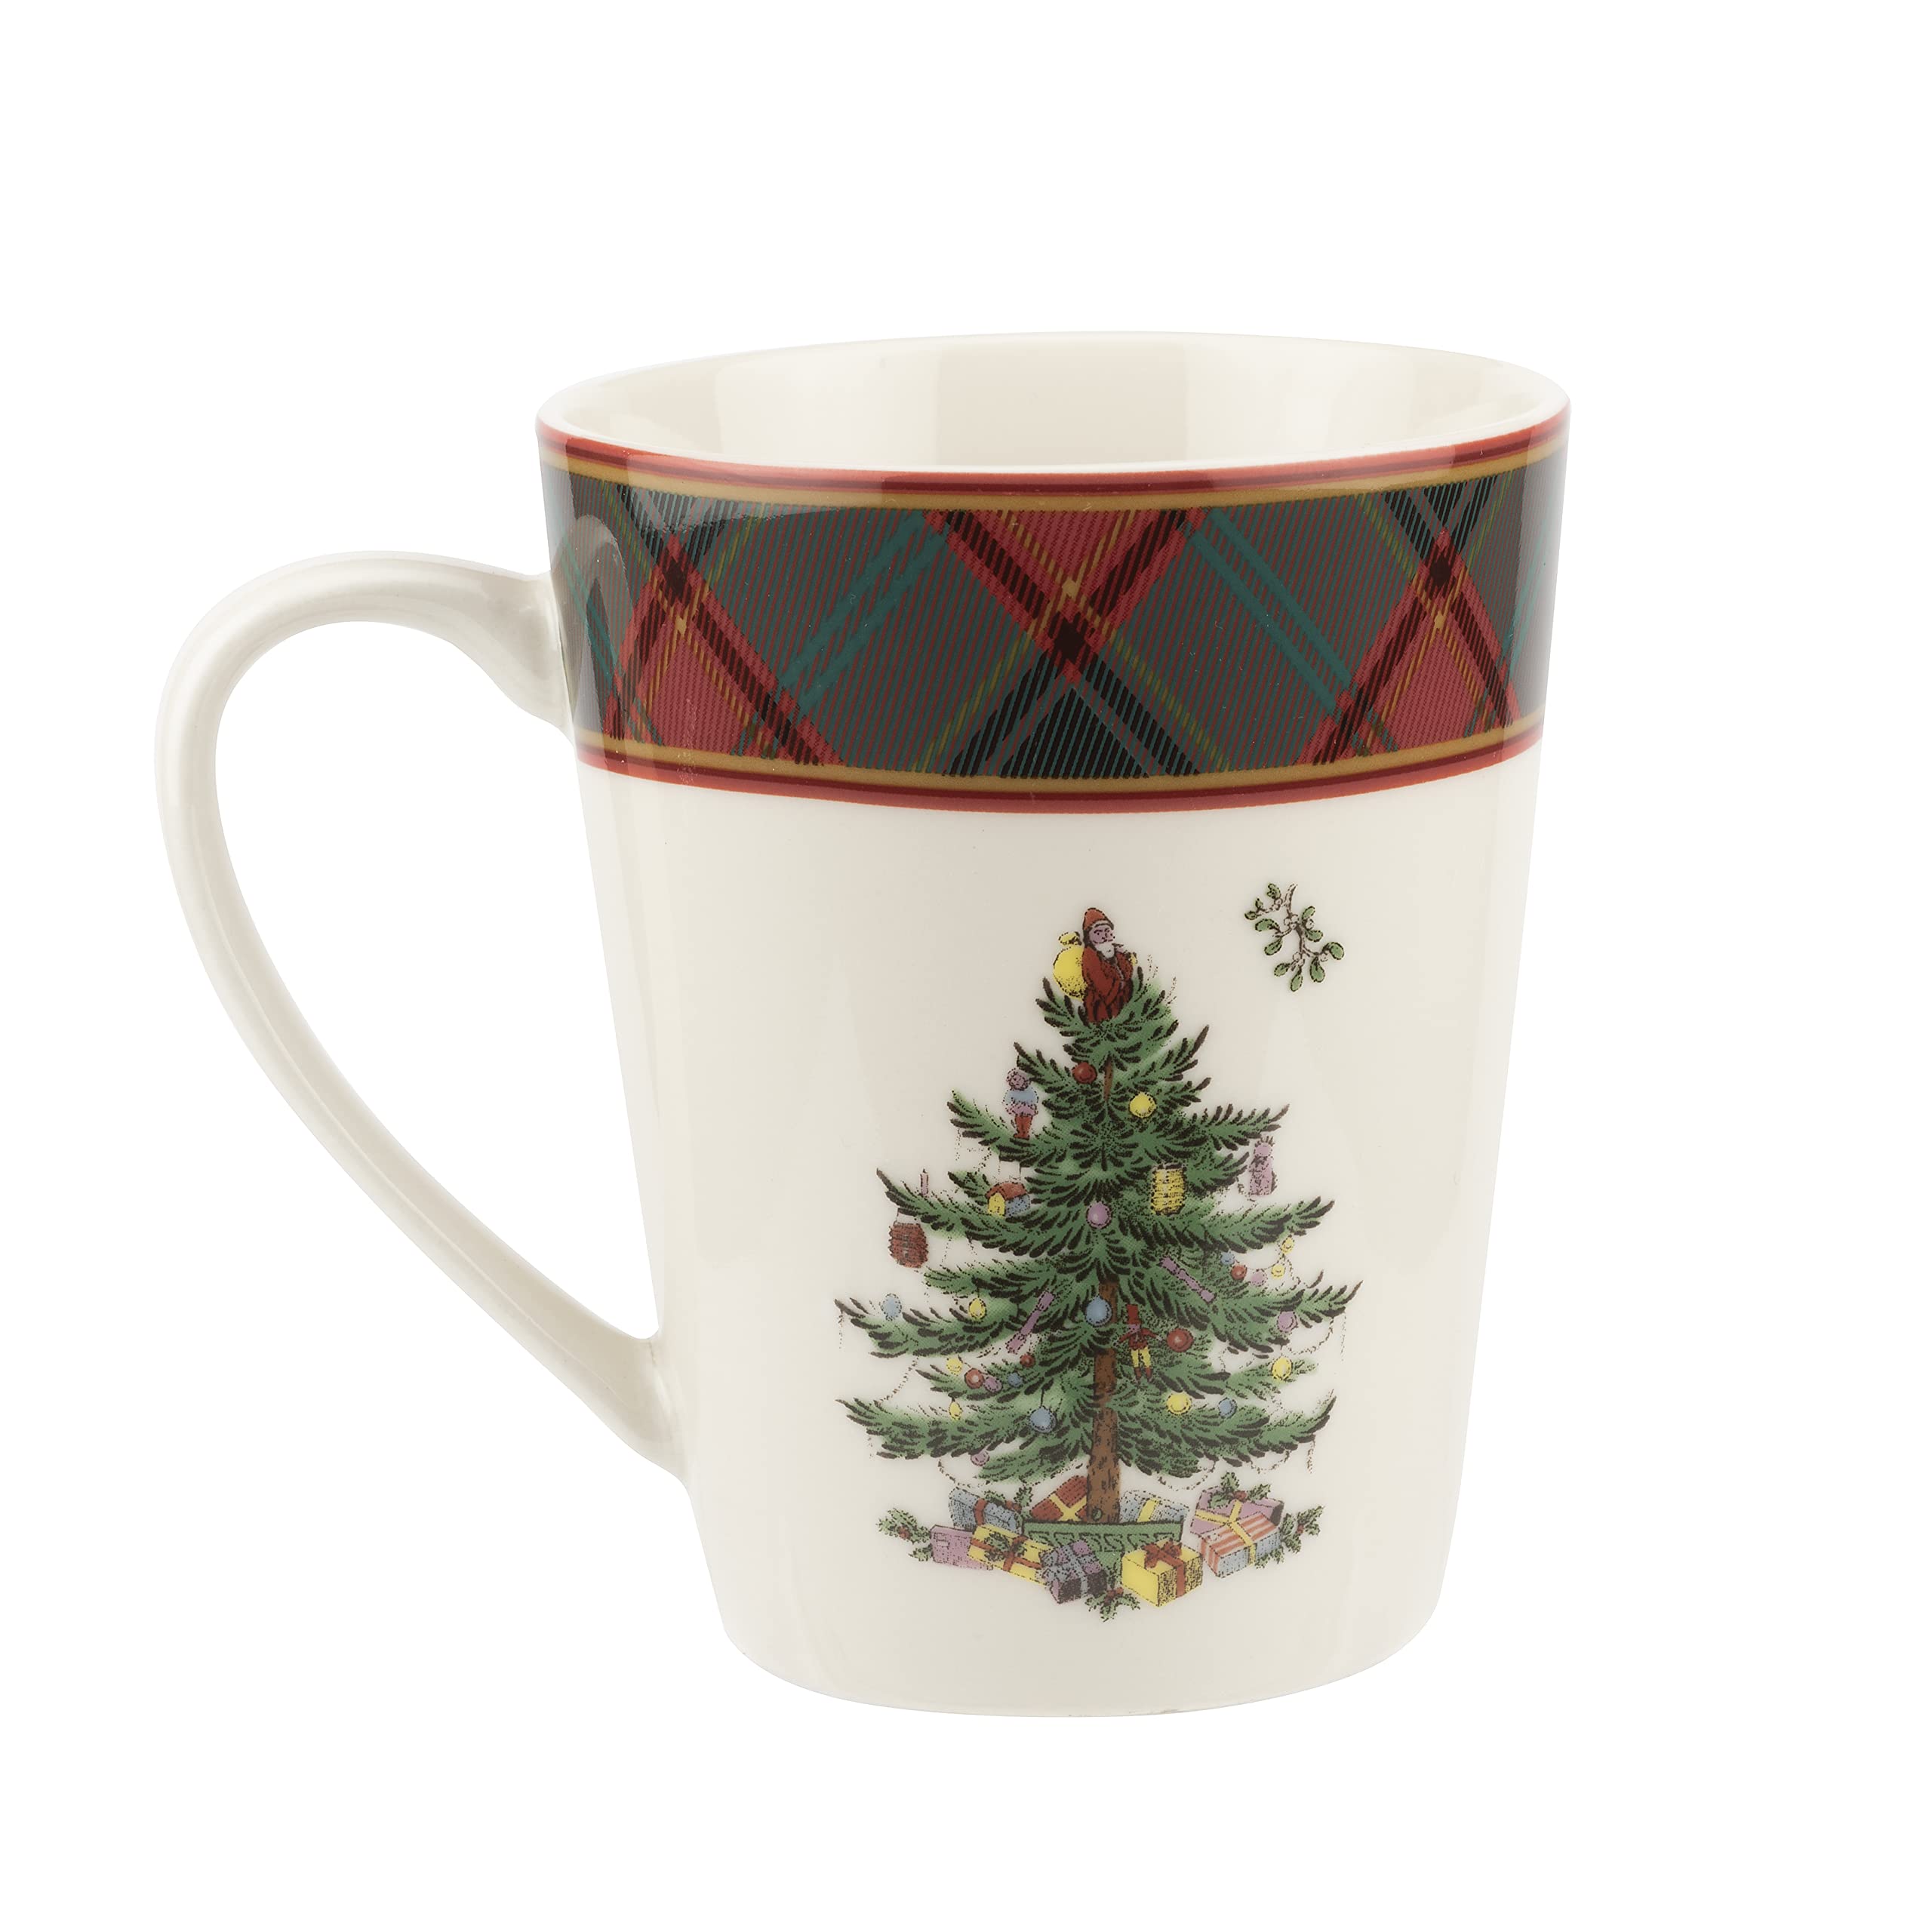 Spode christmas Tree collection Tartan Mug 14 Ounce capacity Made of Porcelain Holiday coffee Mugs cup for Tea, Hot cocoa, and c